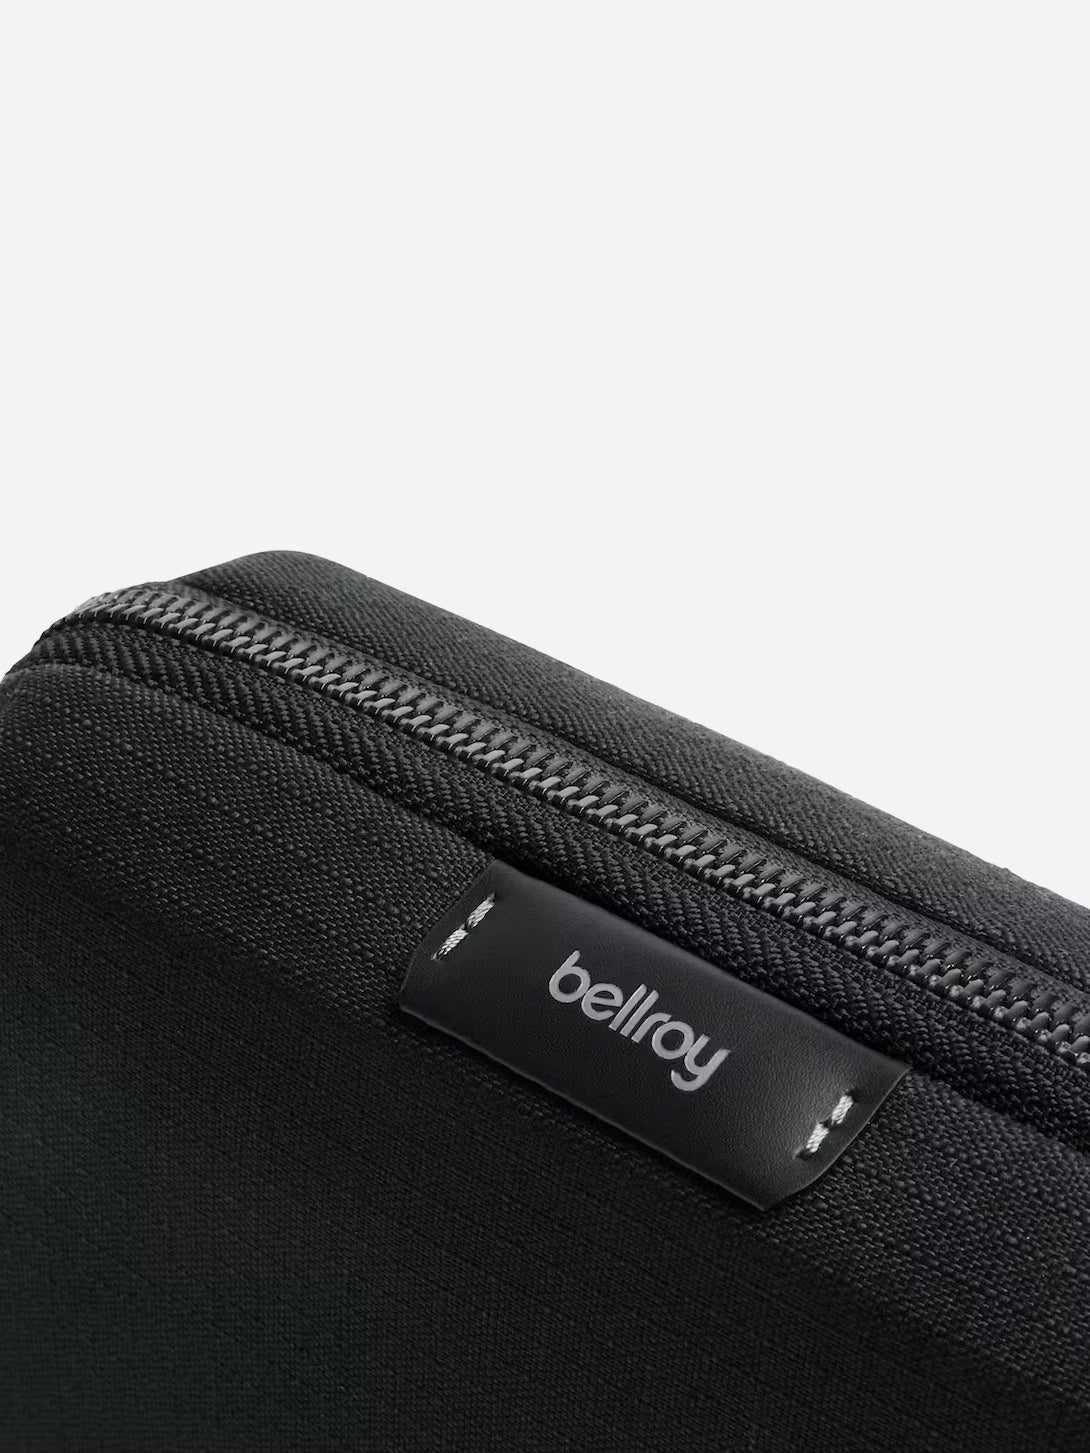 Black Bellroy Tech Kit Compact Accessory Holder